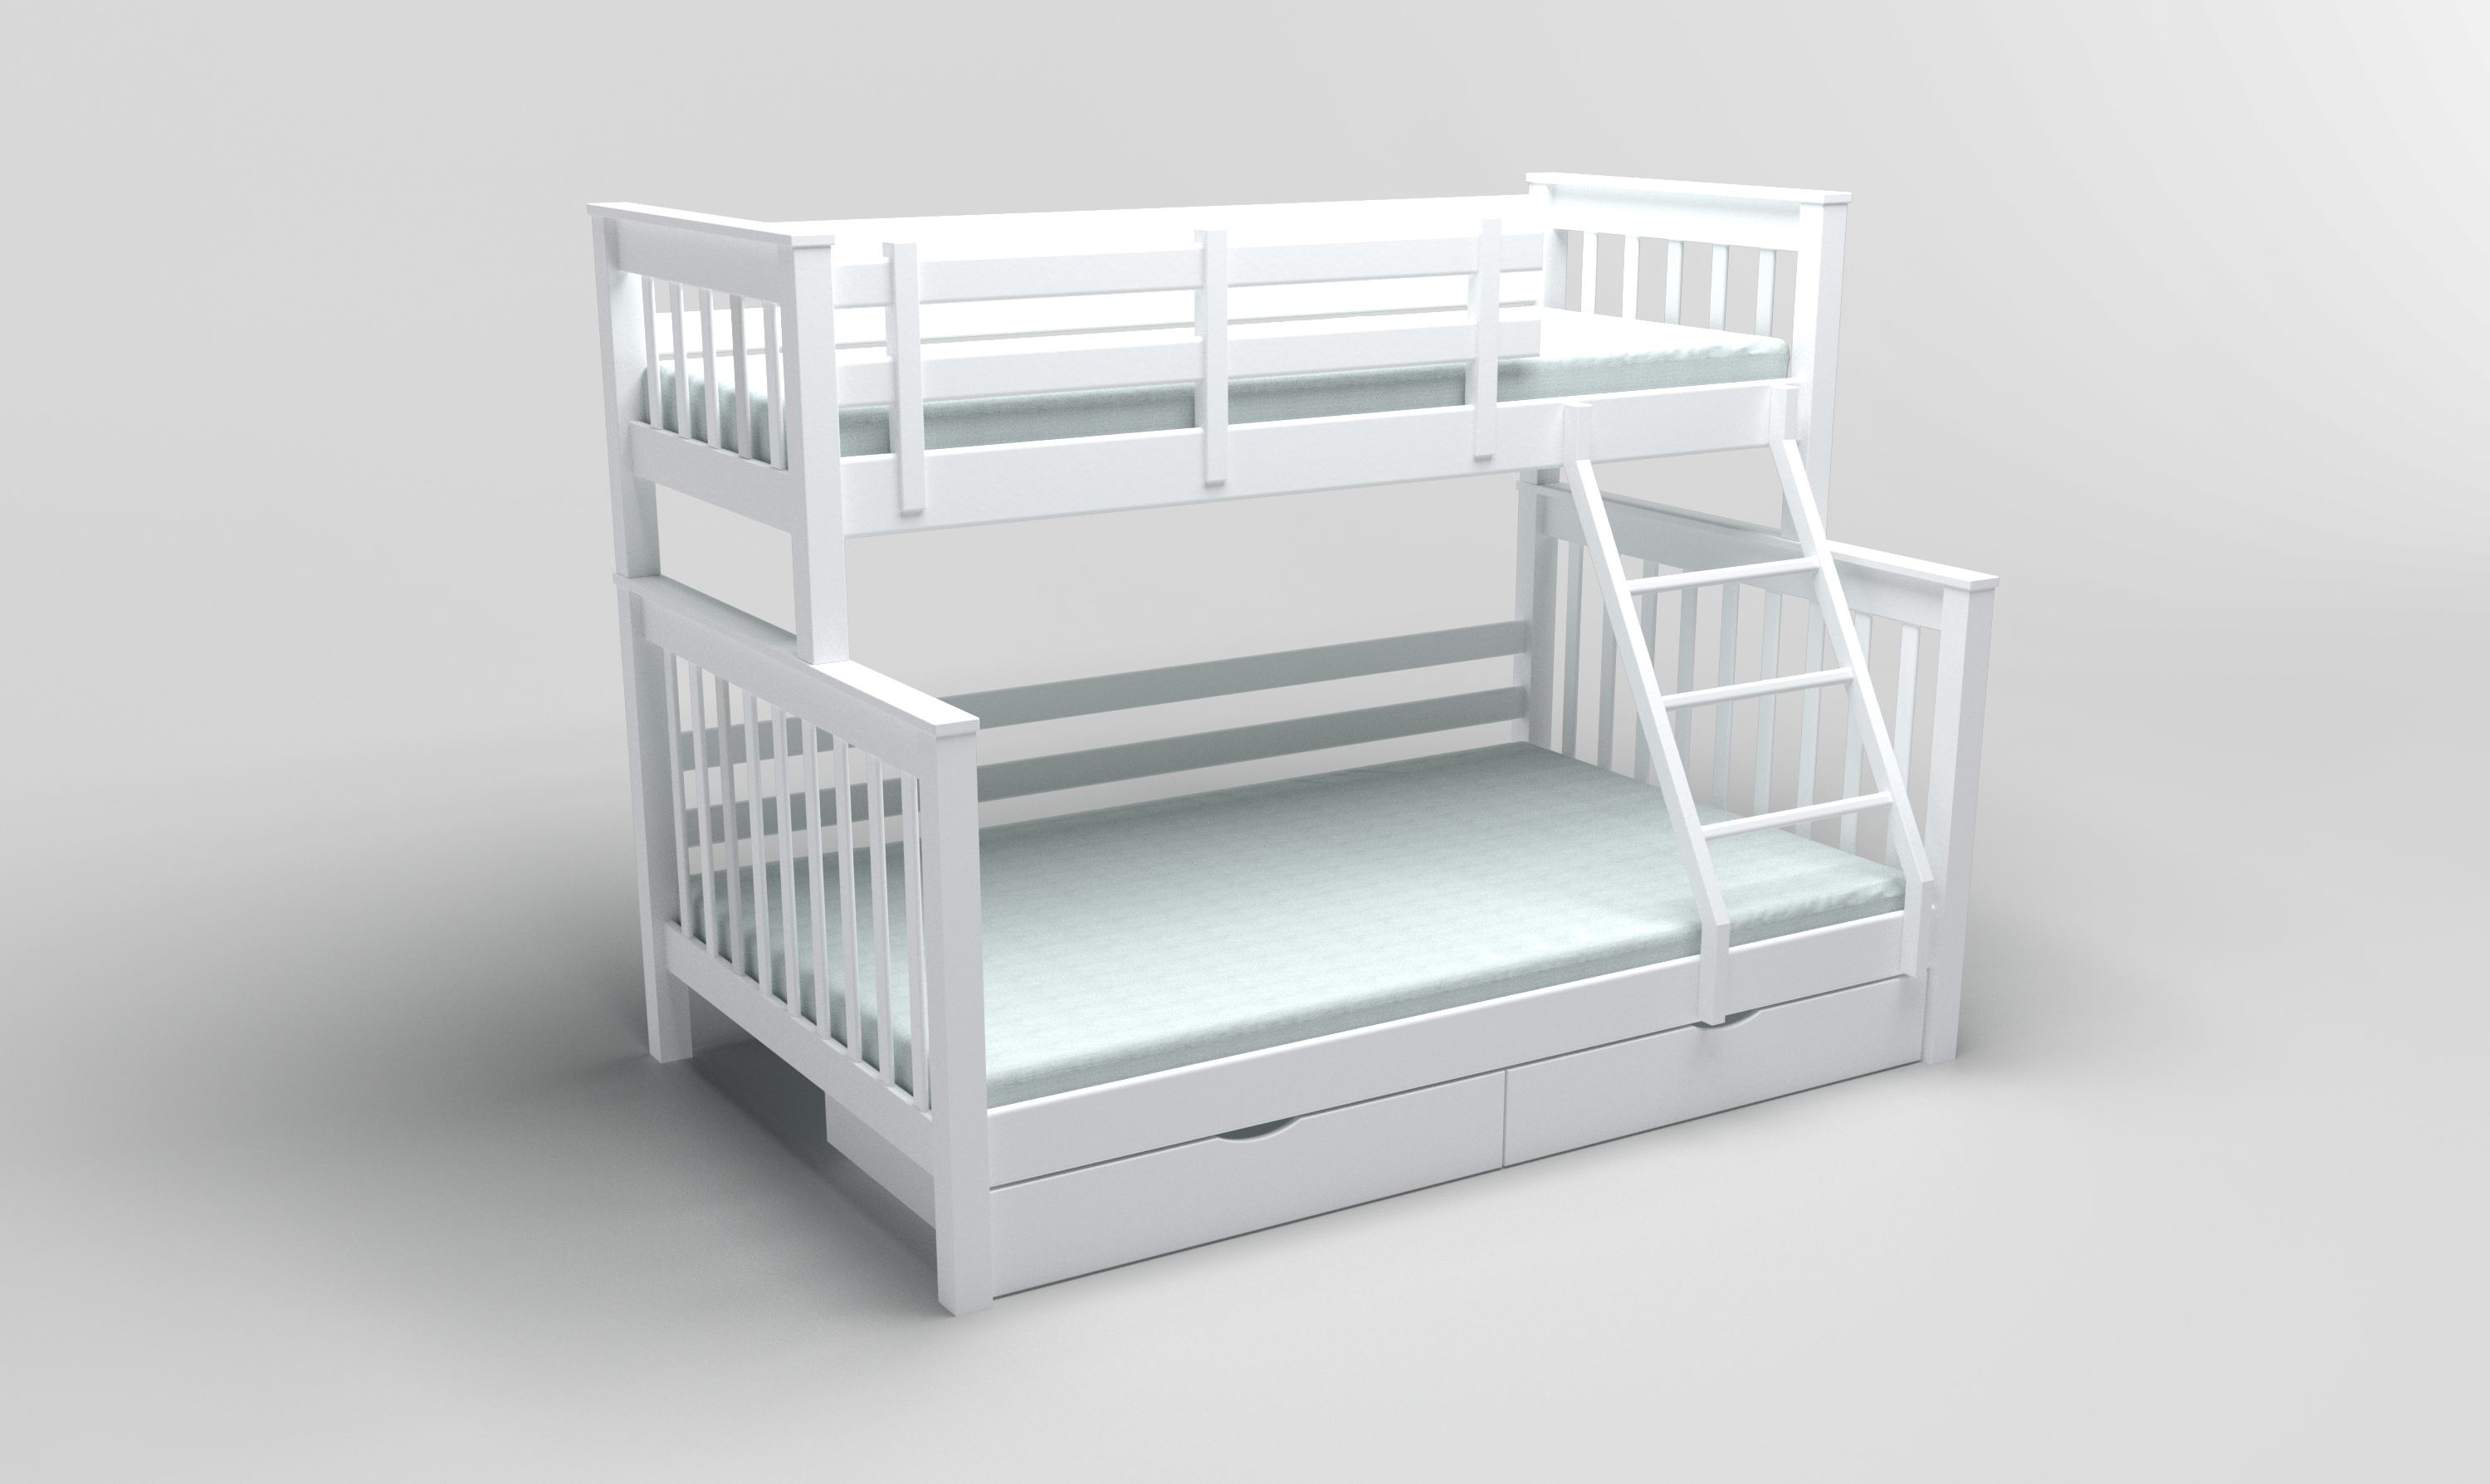 Çocuk 2 katlı yatak in 3d max vray 3.0 resim